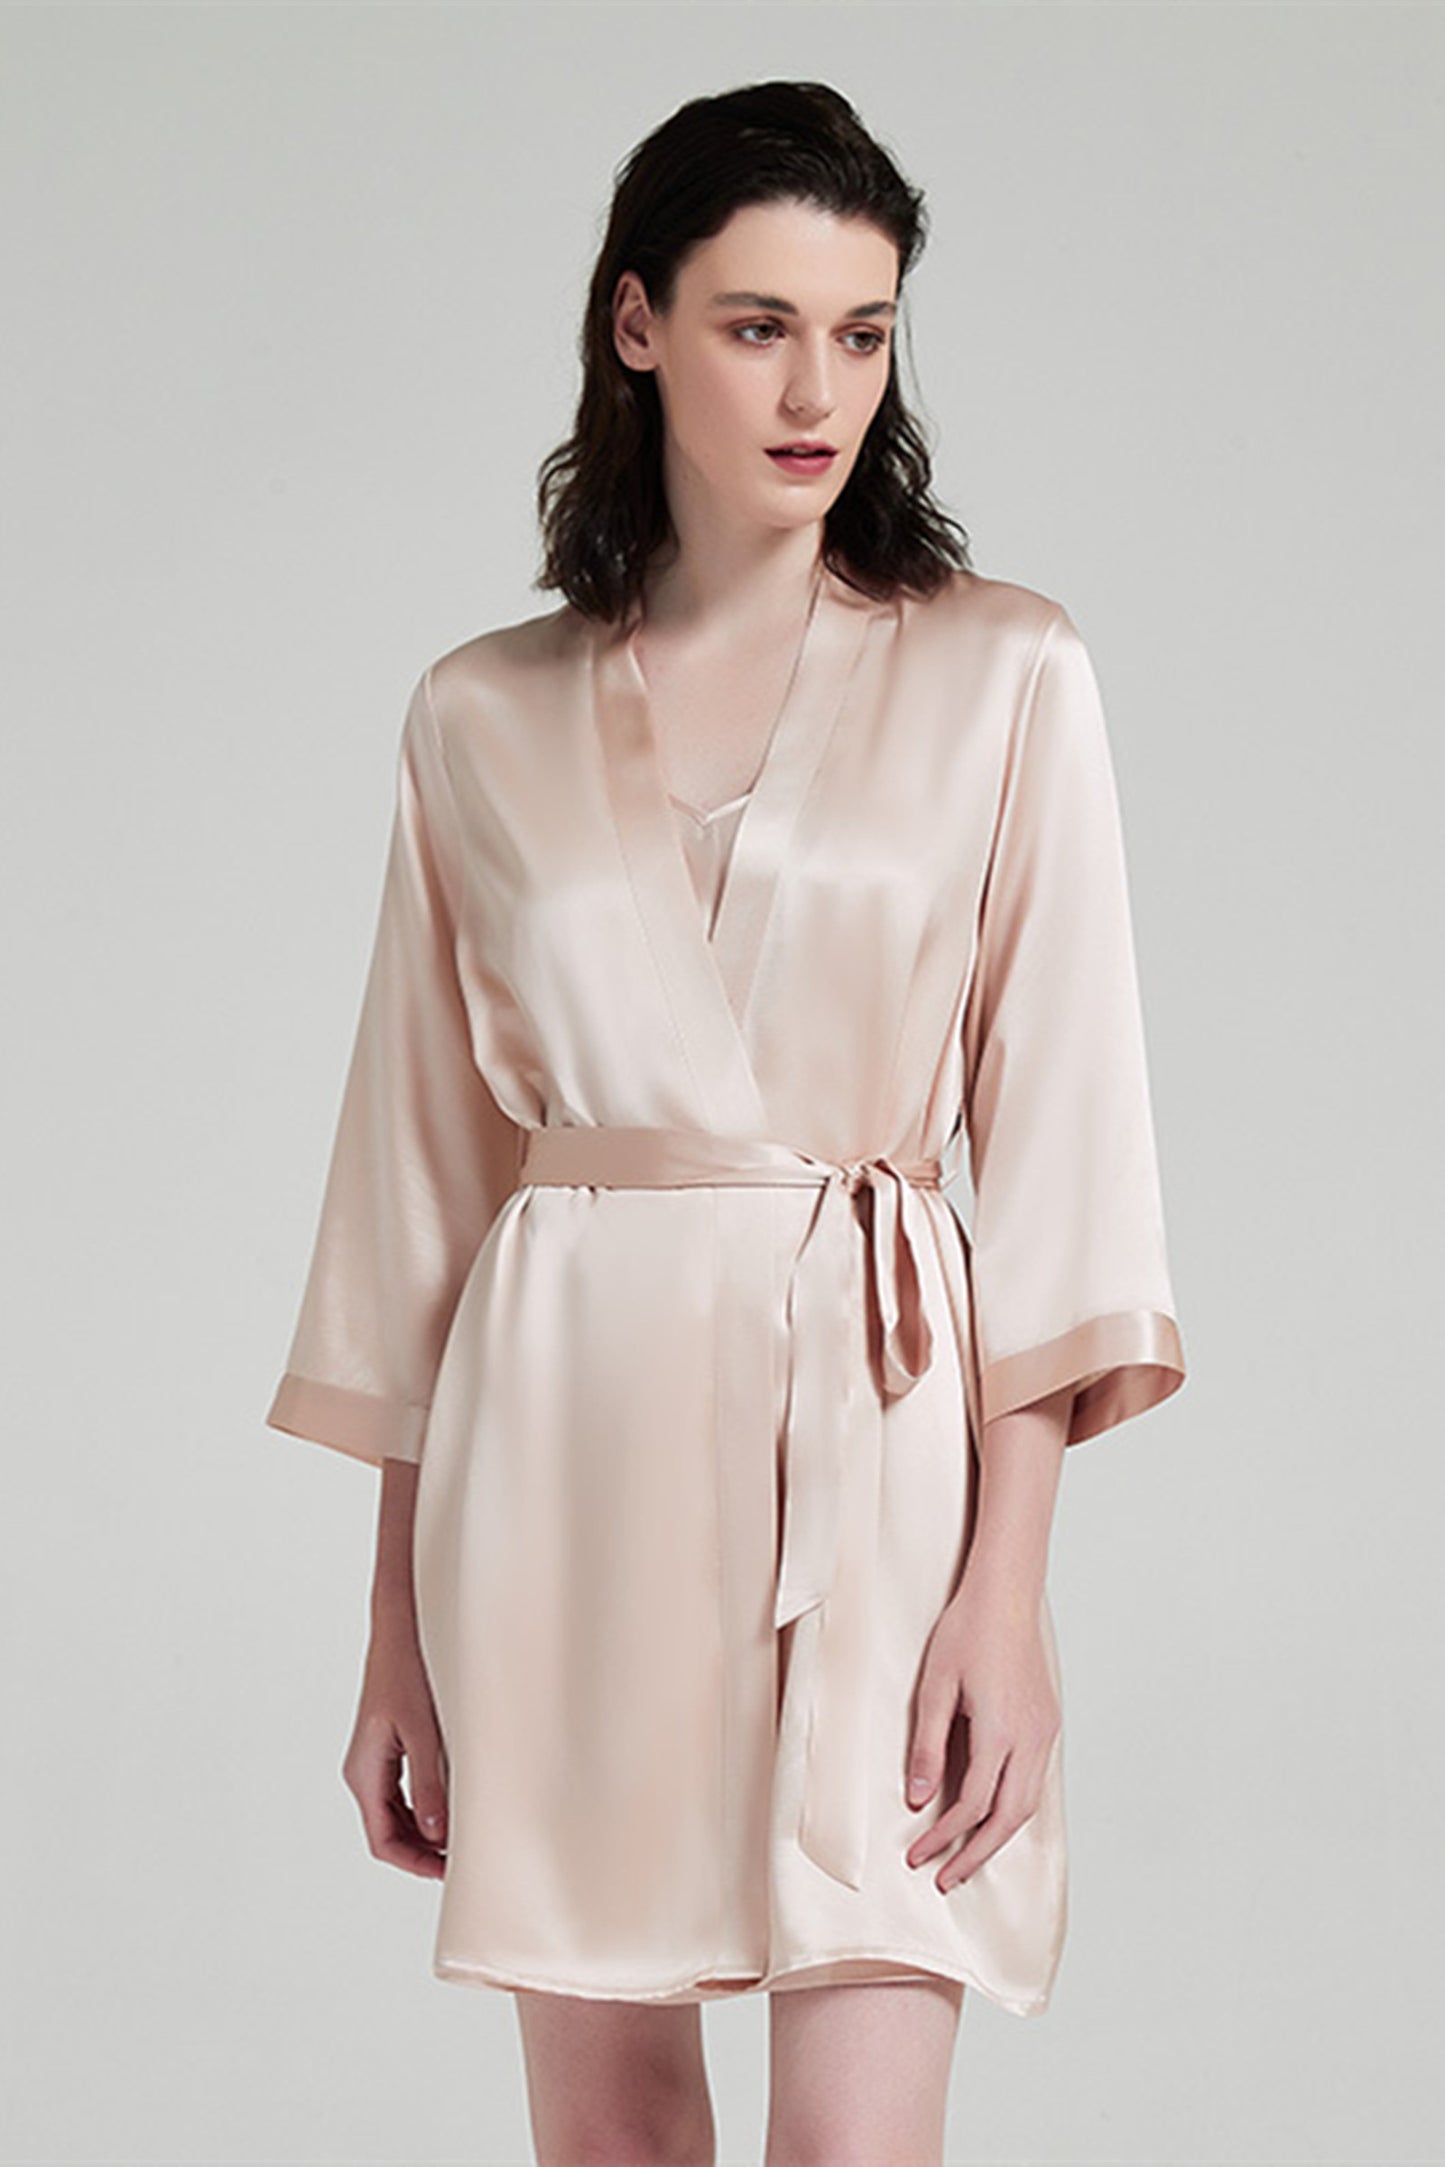 100% Mulberry Silk Comfortable Nightgown Single Piece Loungewear